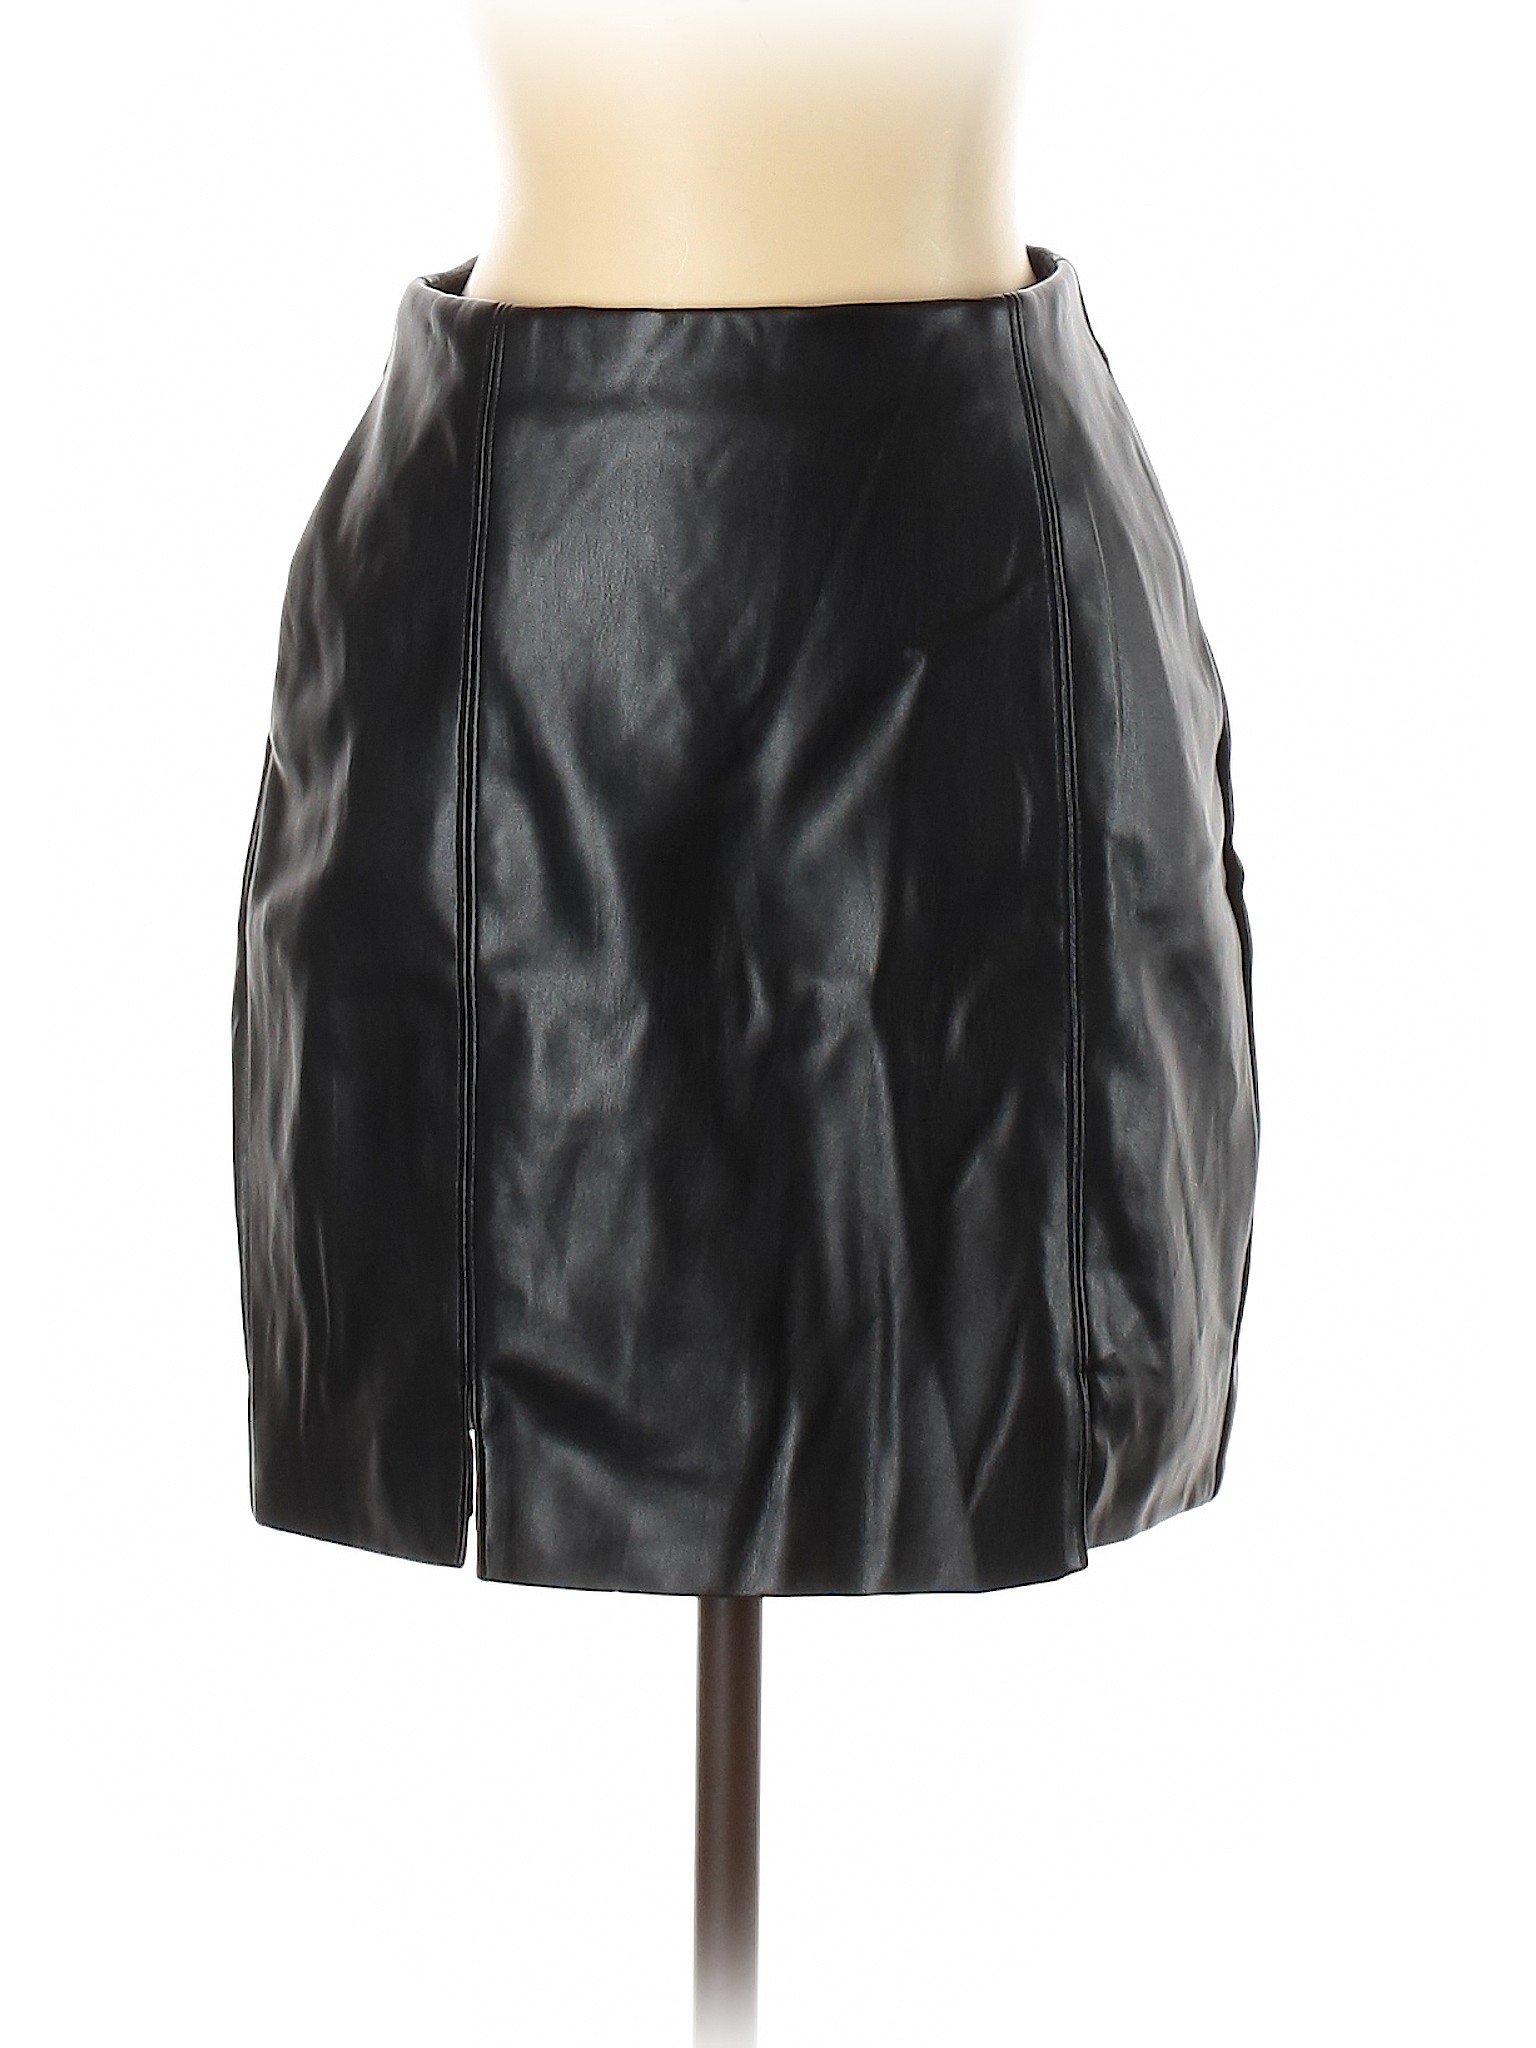 NWT Hollister Women Black Faux Leather Skirt S | eBay